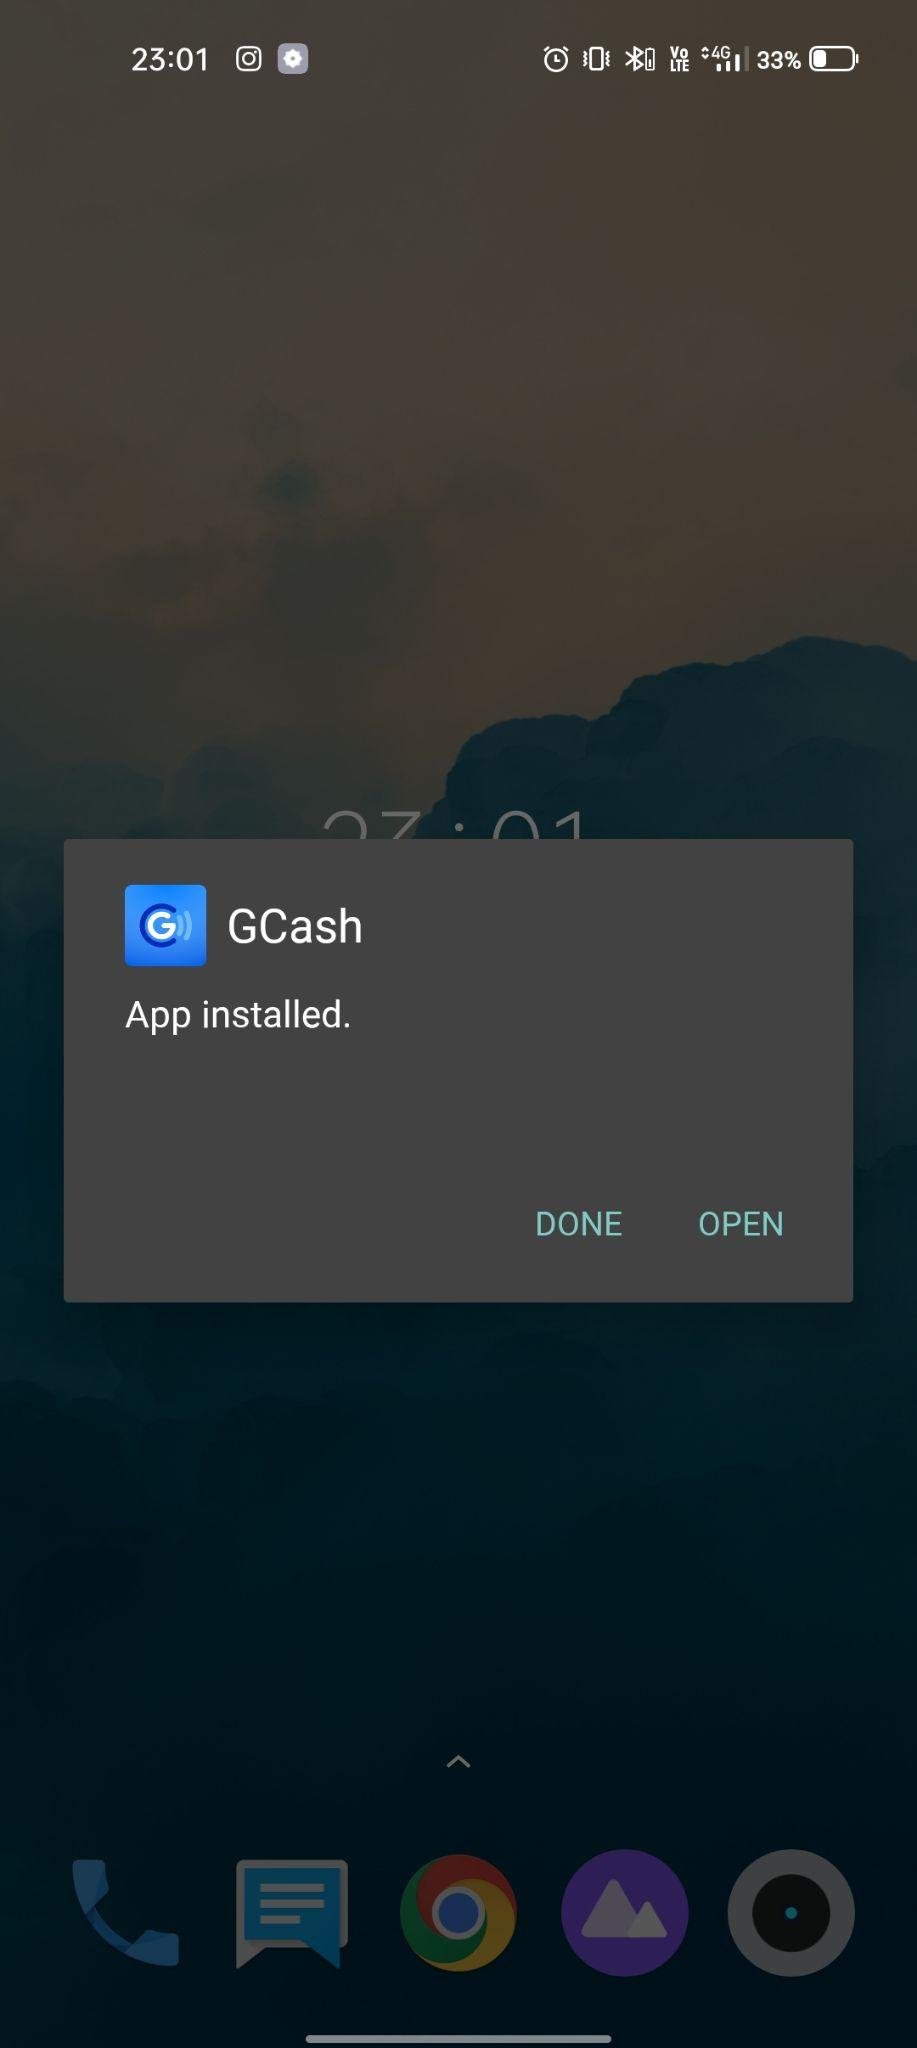 gcash apk installed